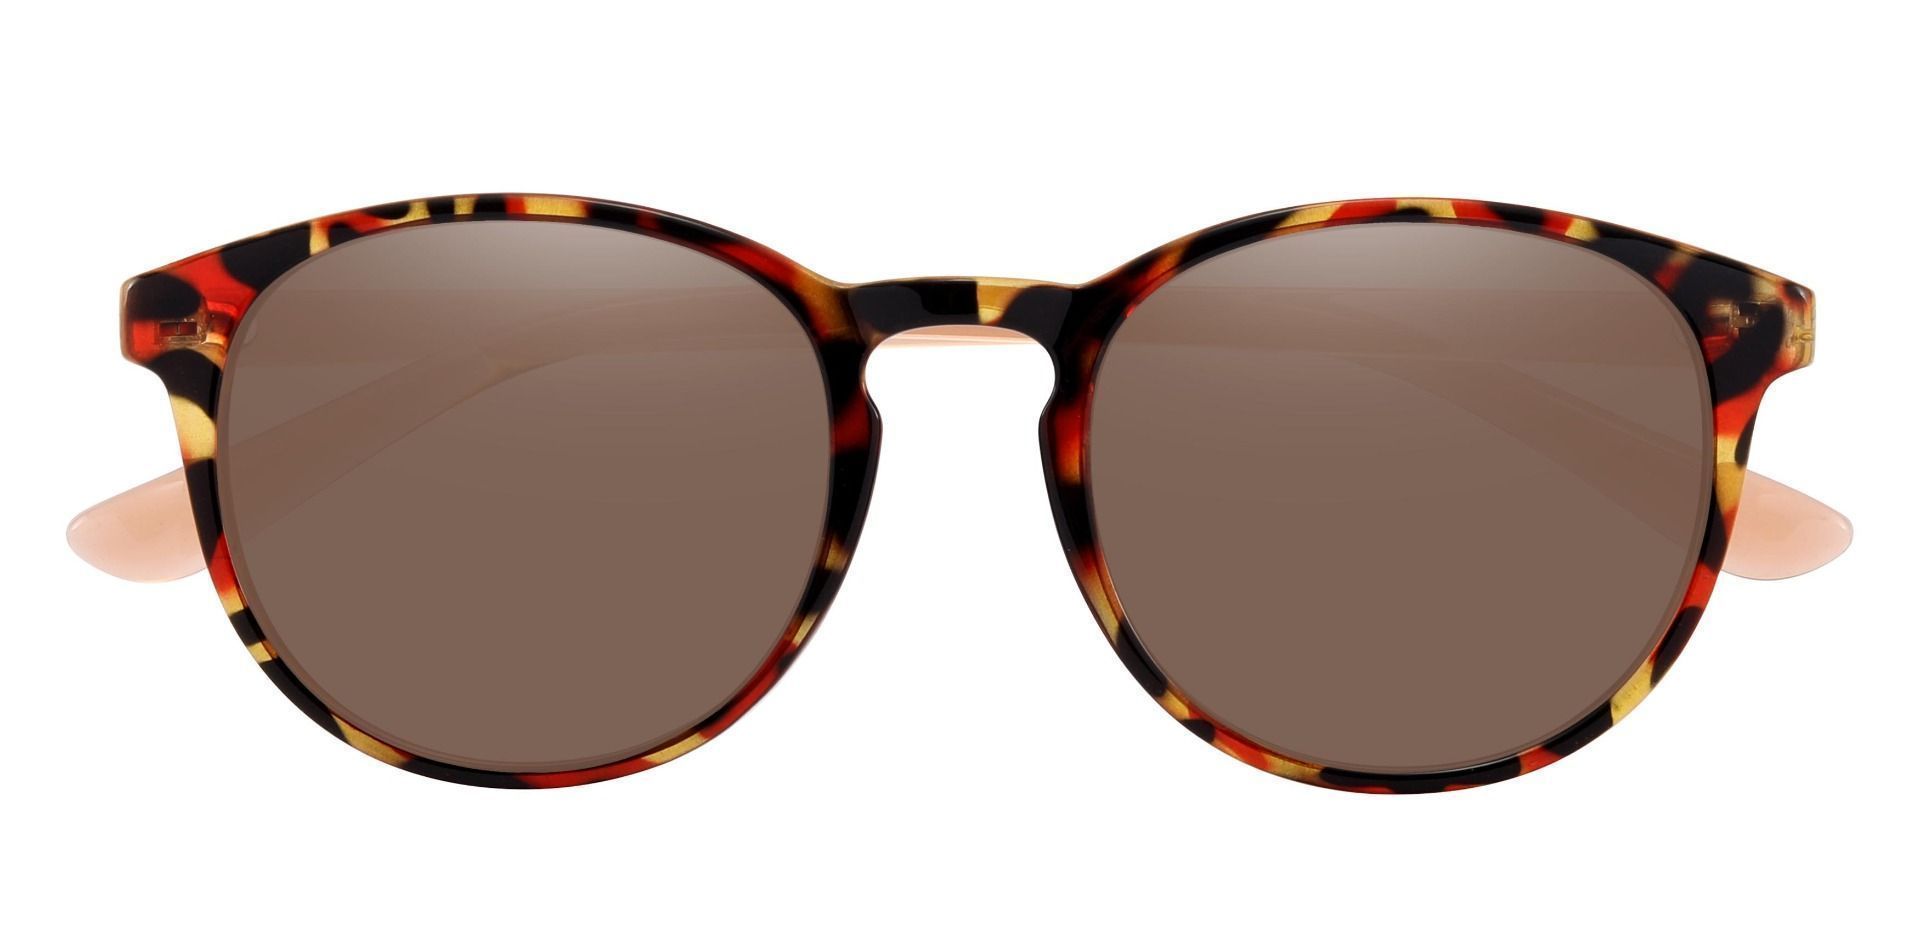 Clarita Oval Prescription Sunglasses - Red Frame With Brown Lenses